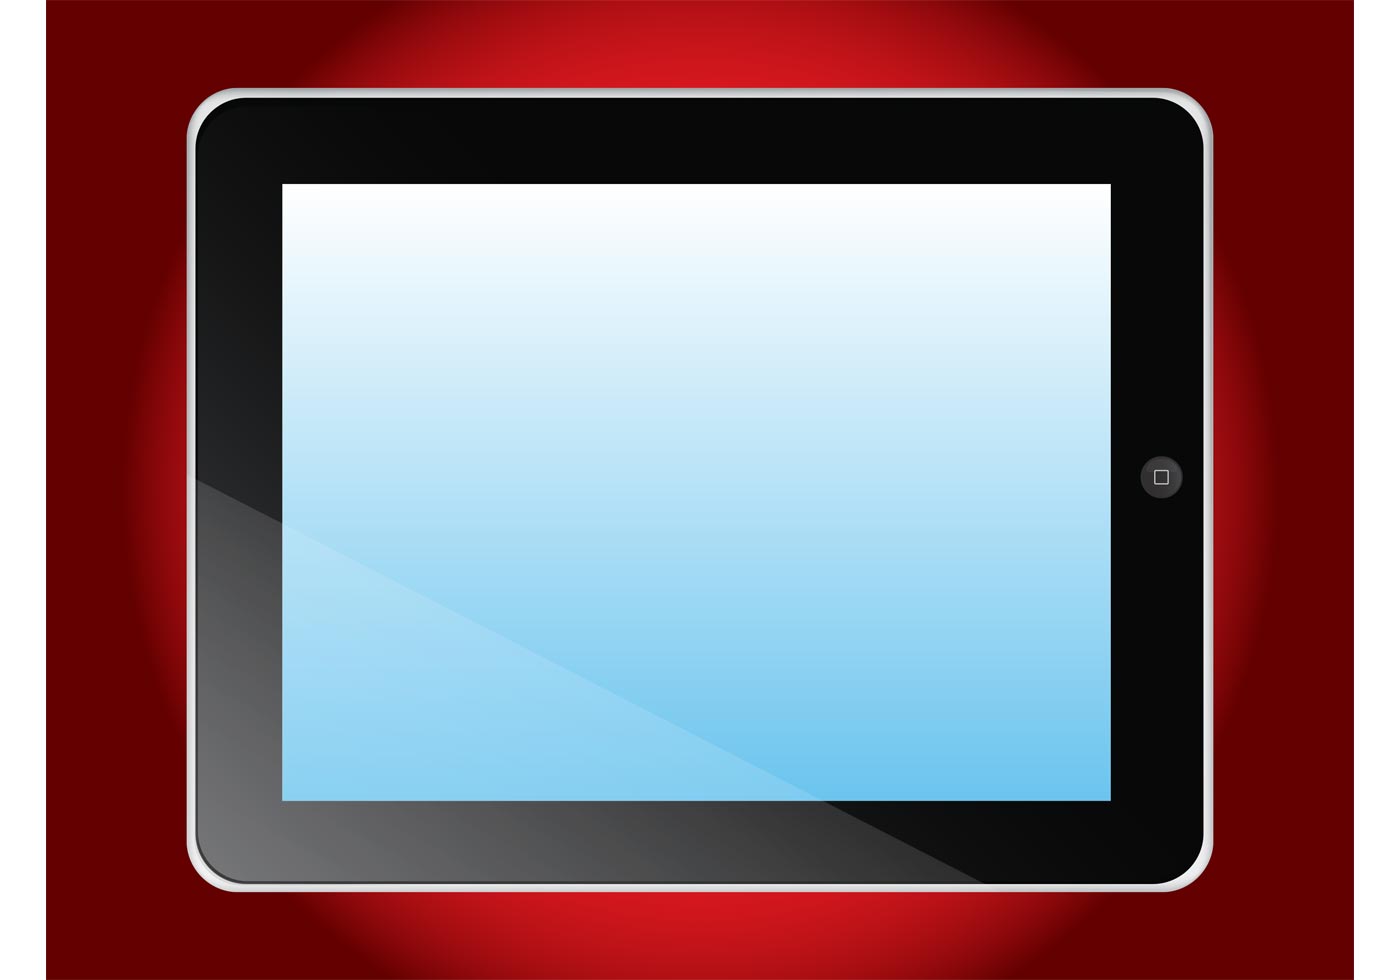 iPad Design - Download Free Vector Art, Stock Graphics ...